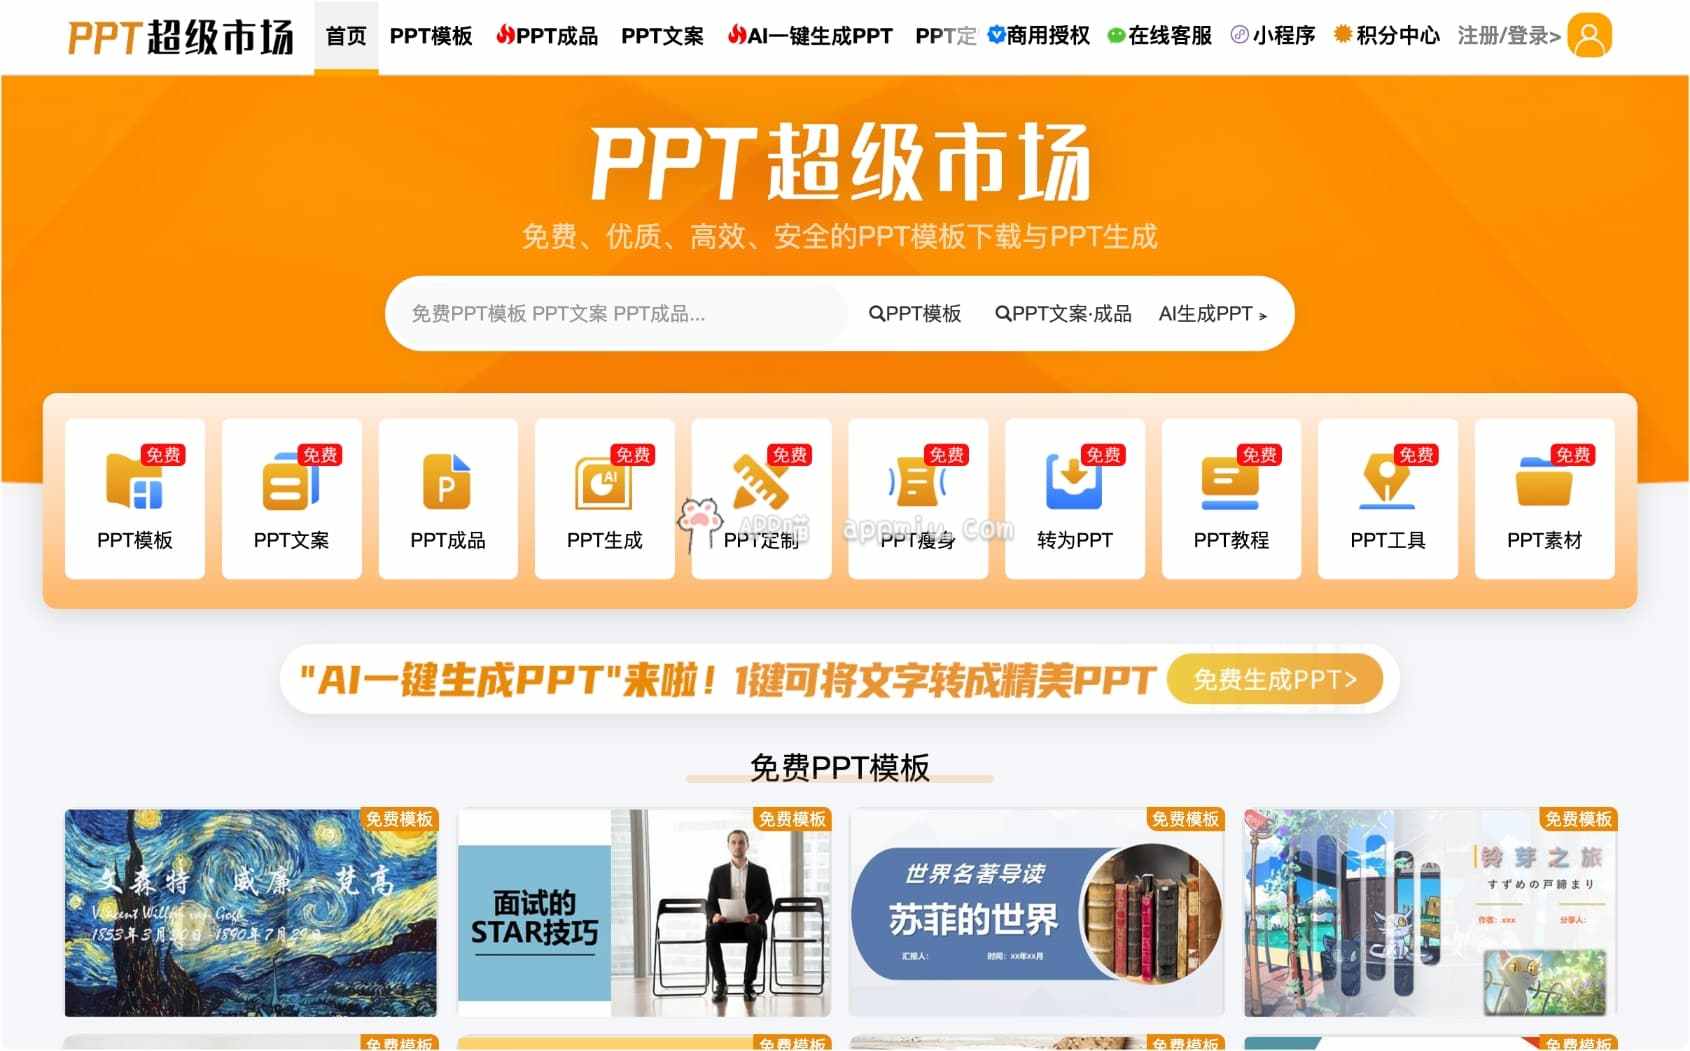 PPT超级市场，免费PPT模板下载与PPT定制，免费体验AI一键生成PPT-APP喵